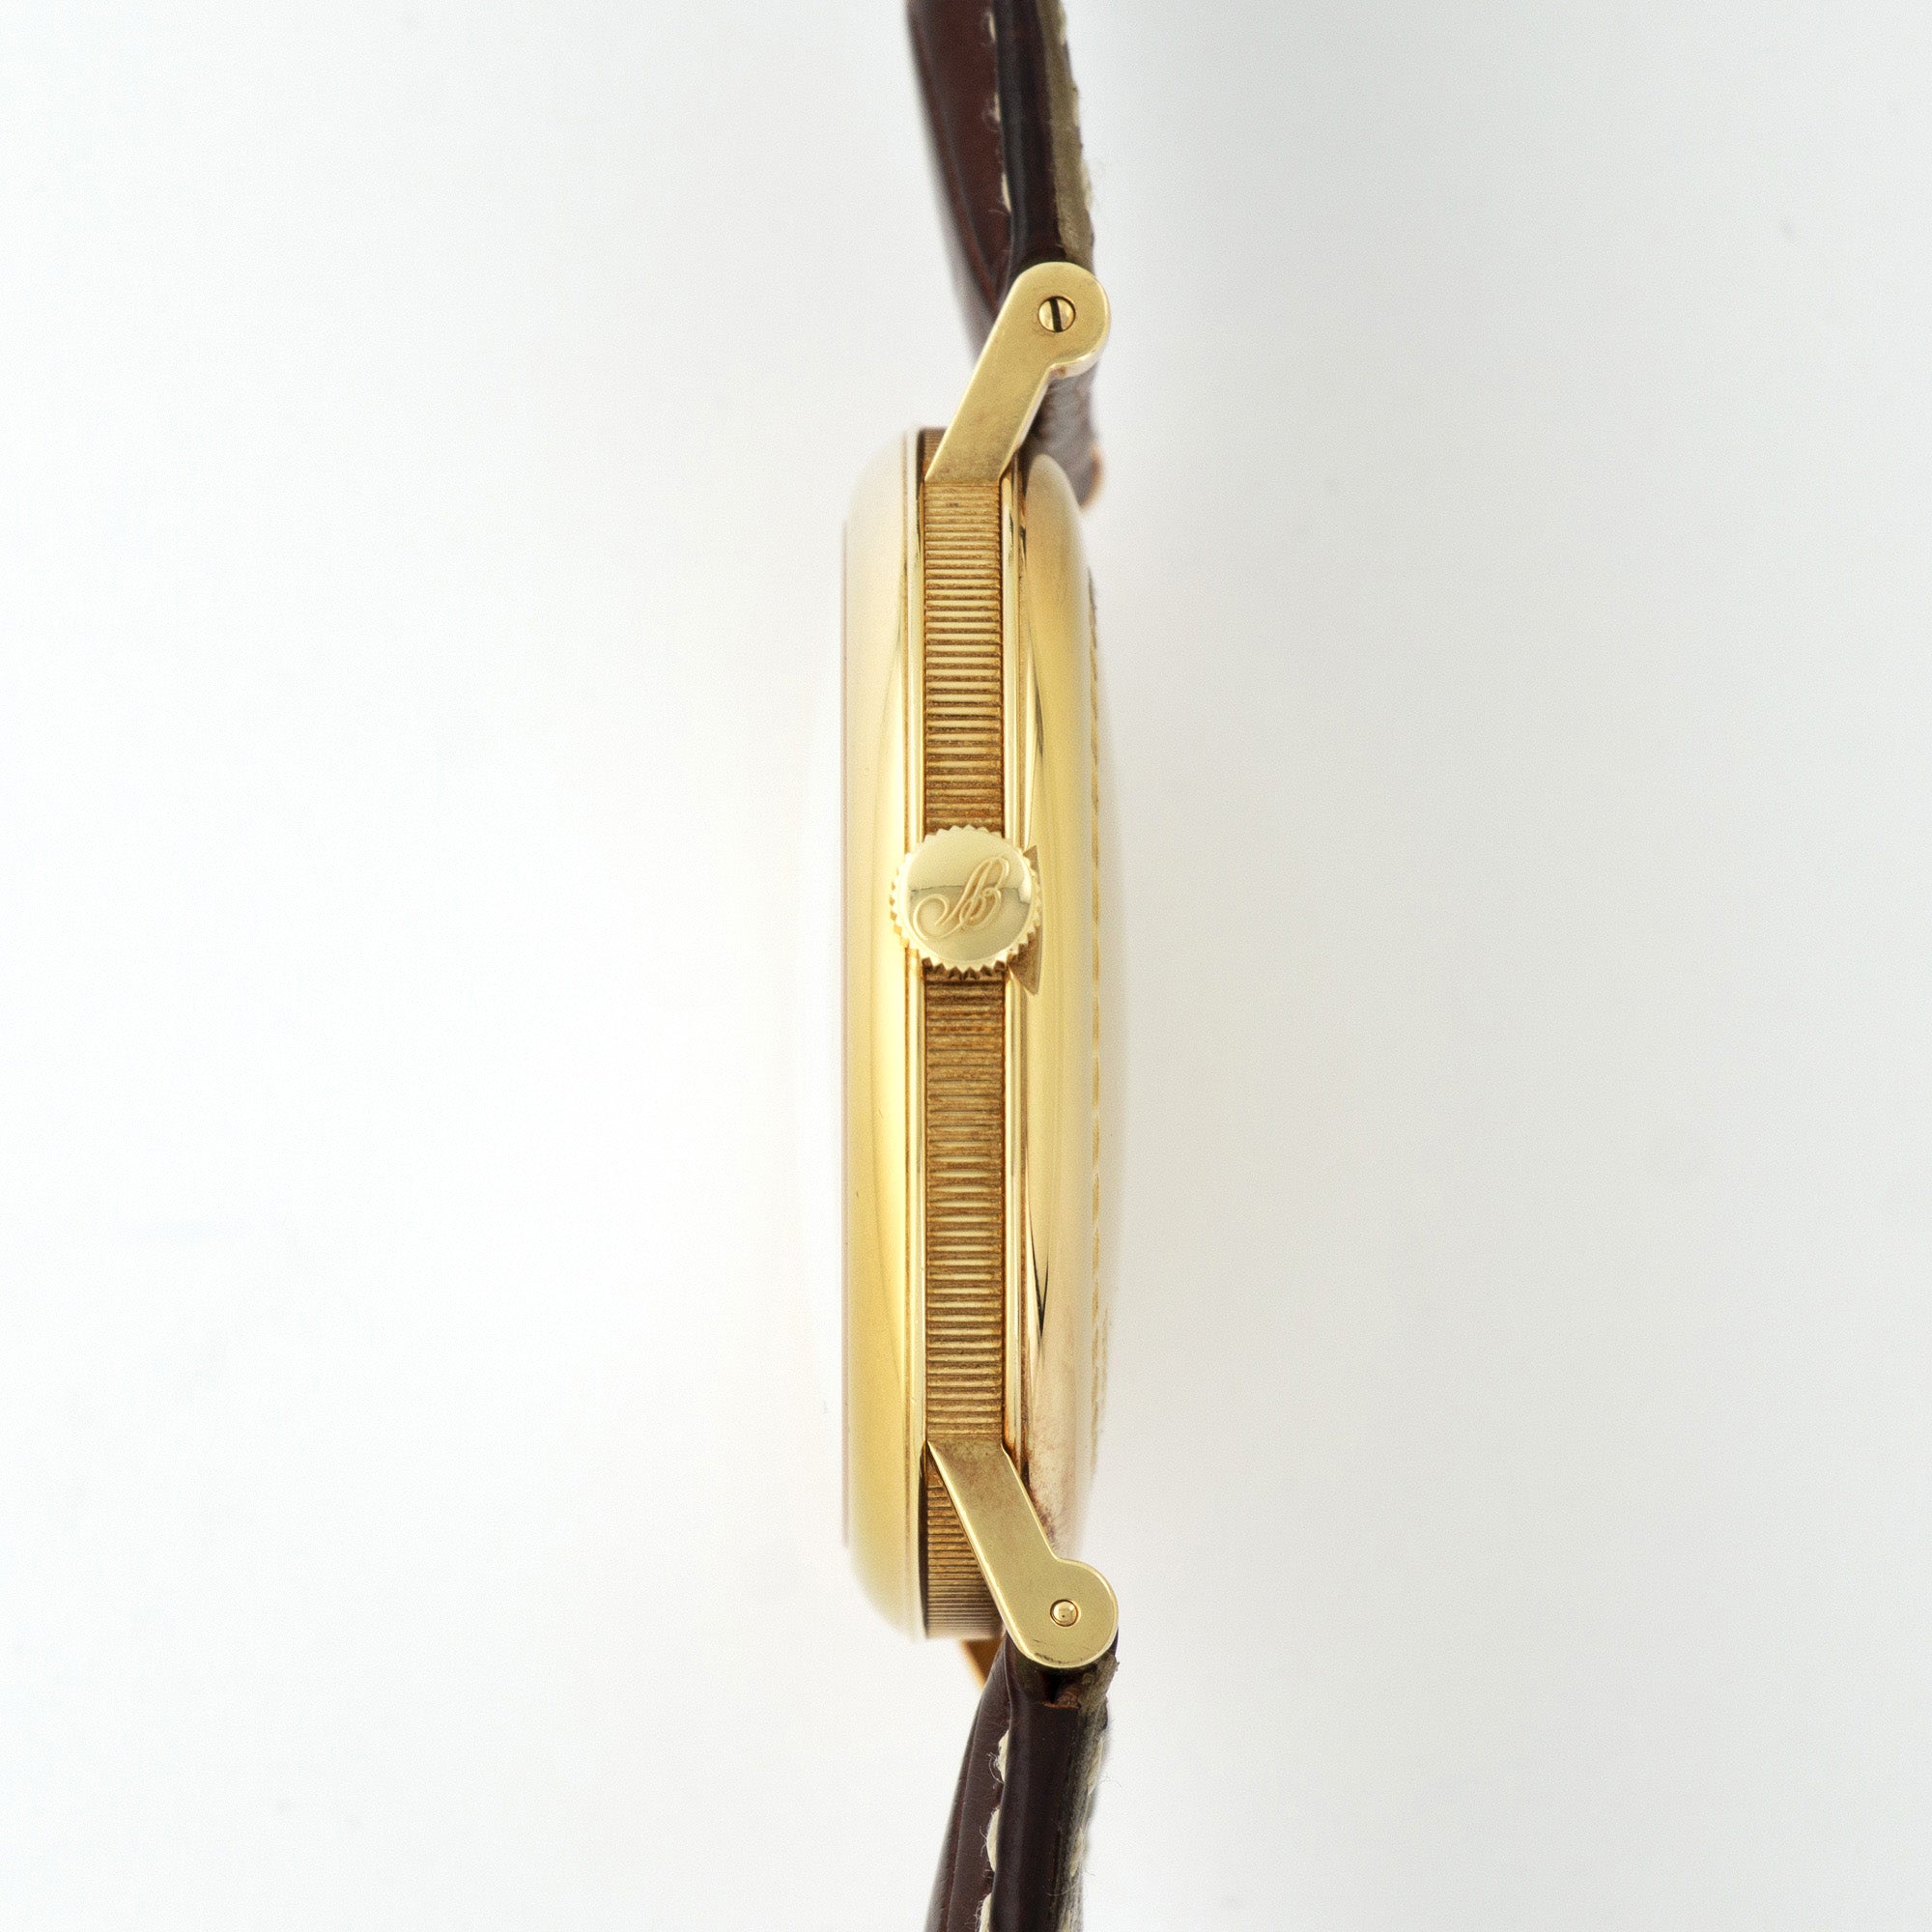 Breguet - Breguet Yellow Gold Classique Enamel Dial Watch Ref. 5140 - The Keystone Watches